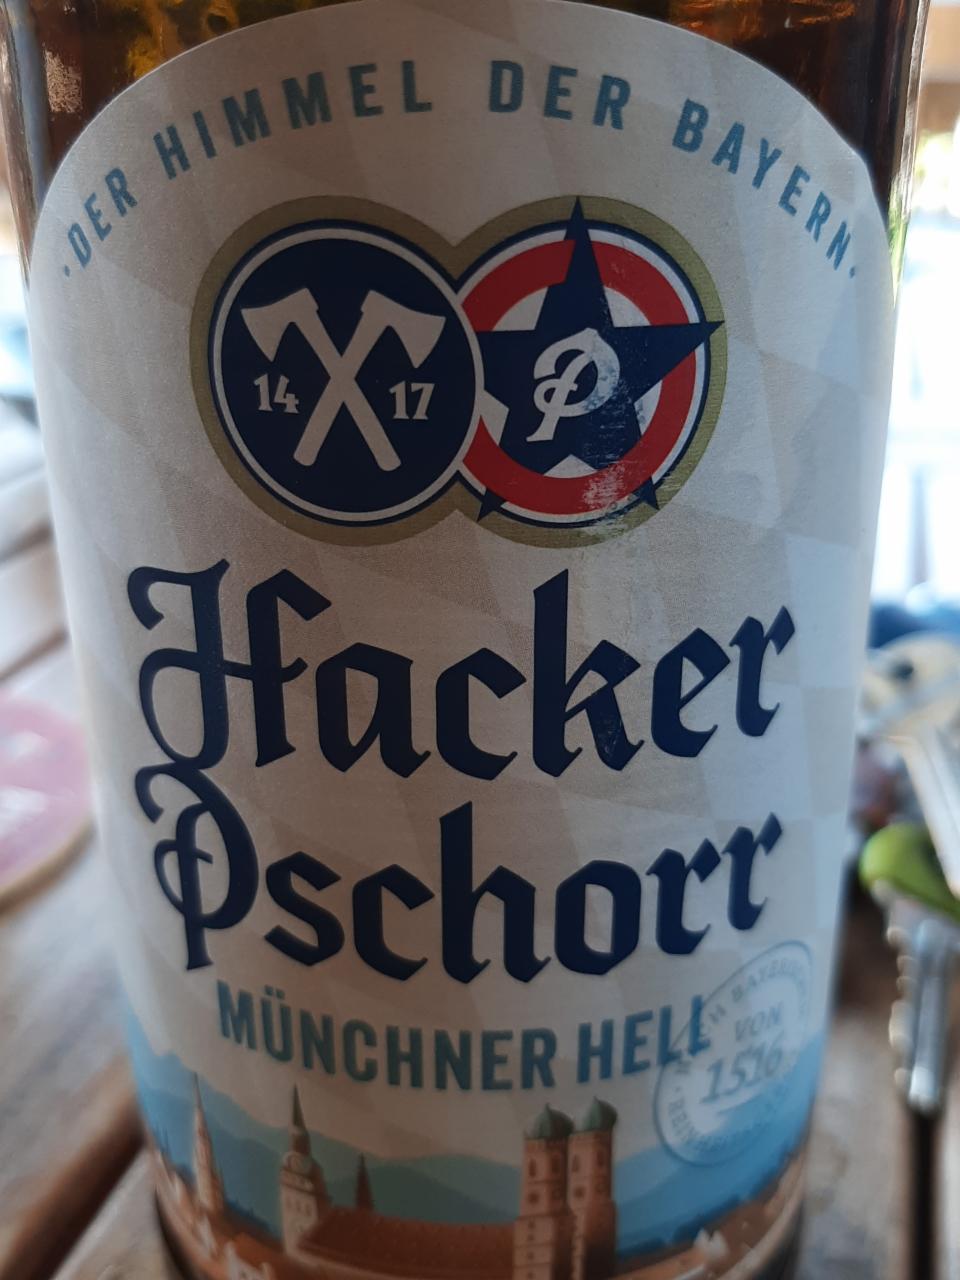 Fotografie - Hacker pschorr Münchner Hell